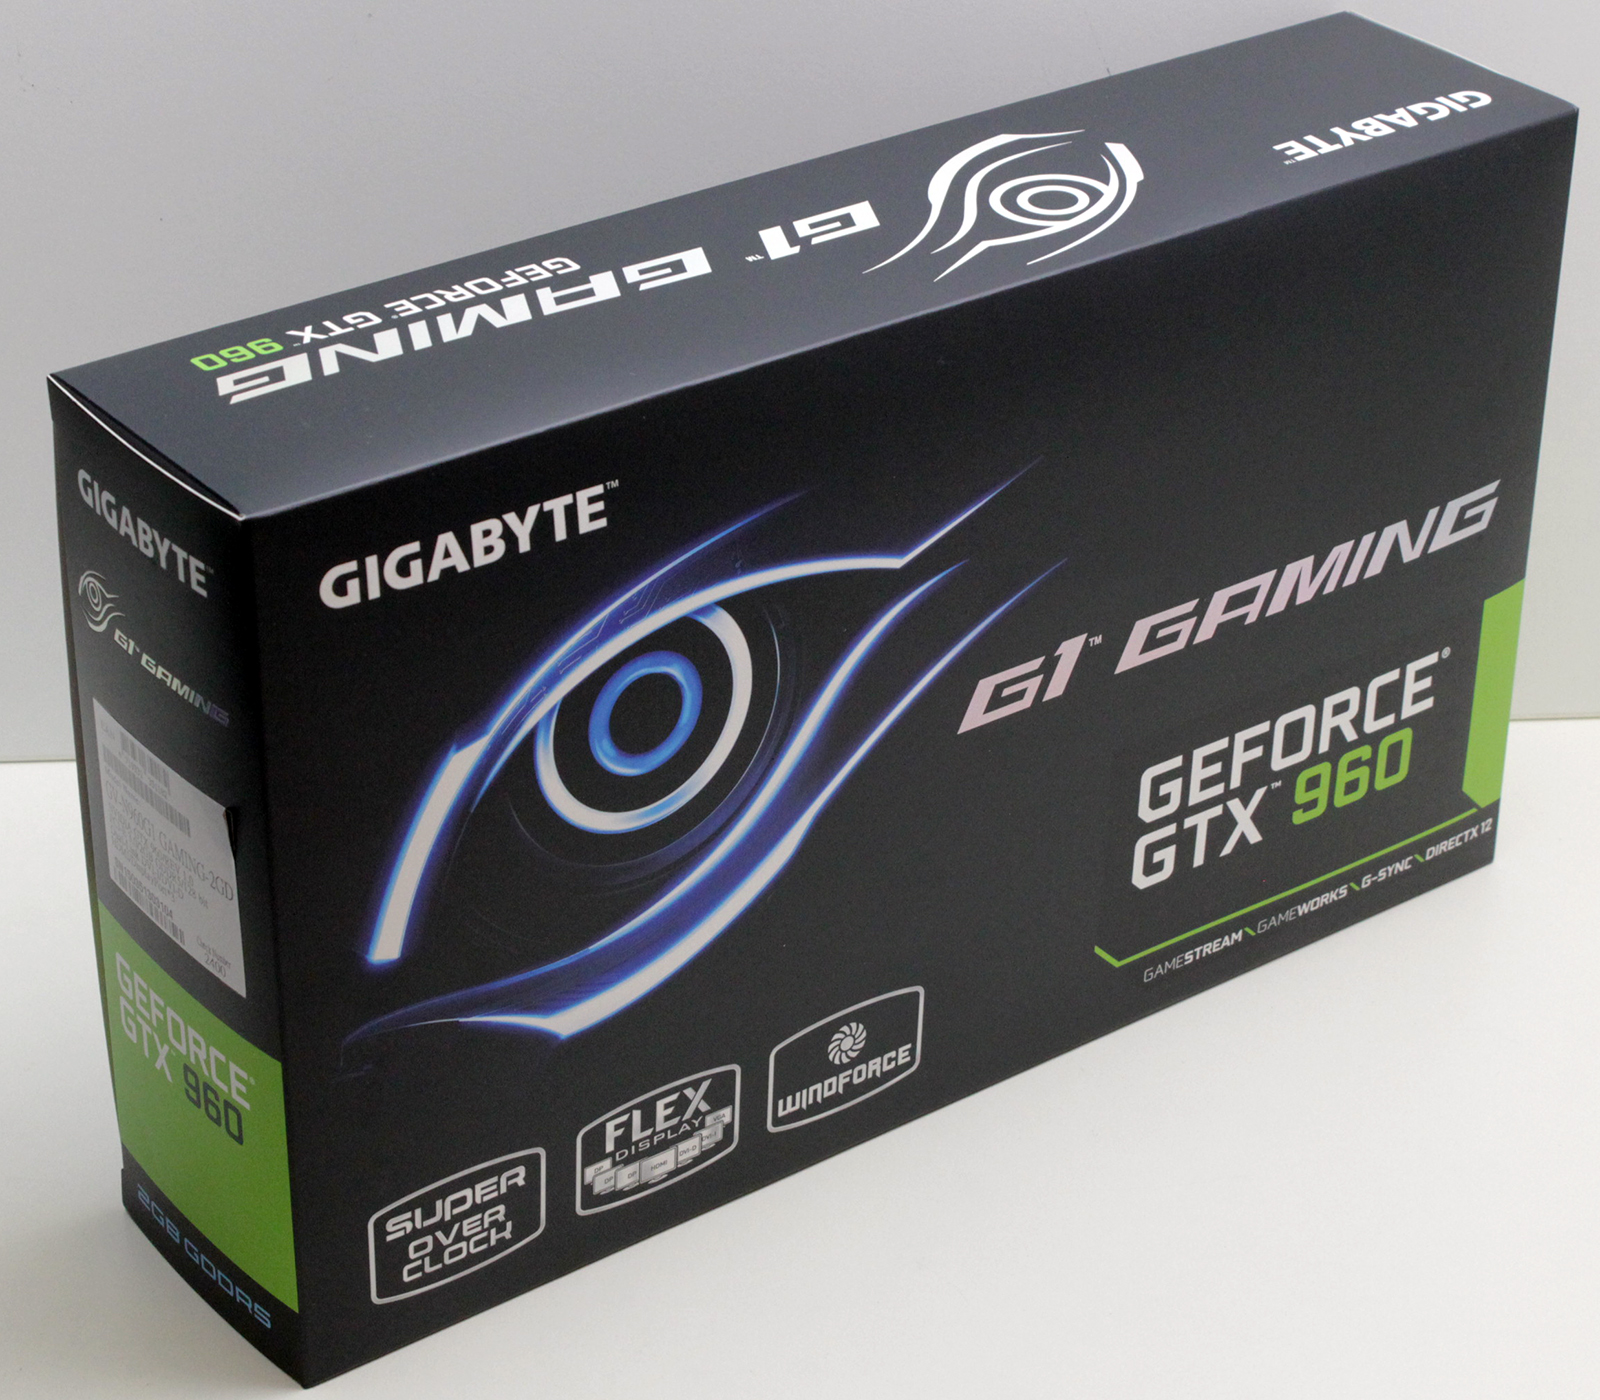 Gigabyte Gtx 960 G1 Gaming Reviewed